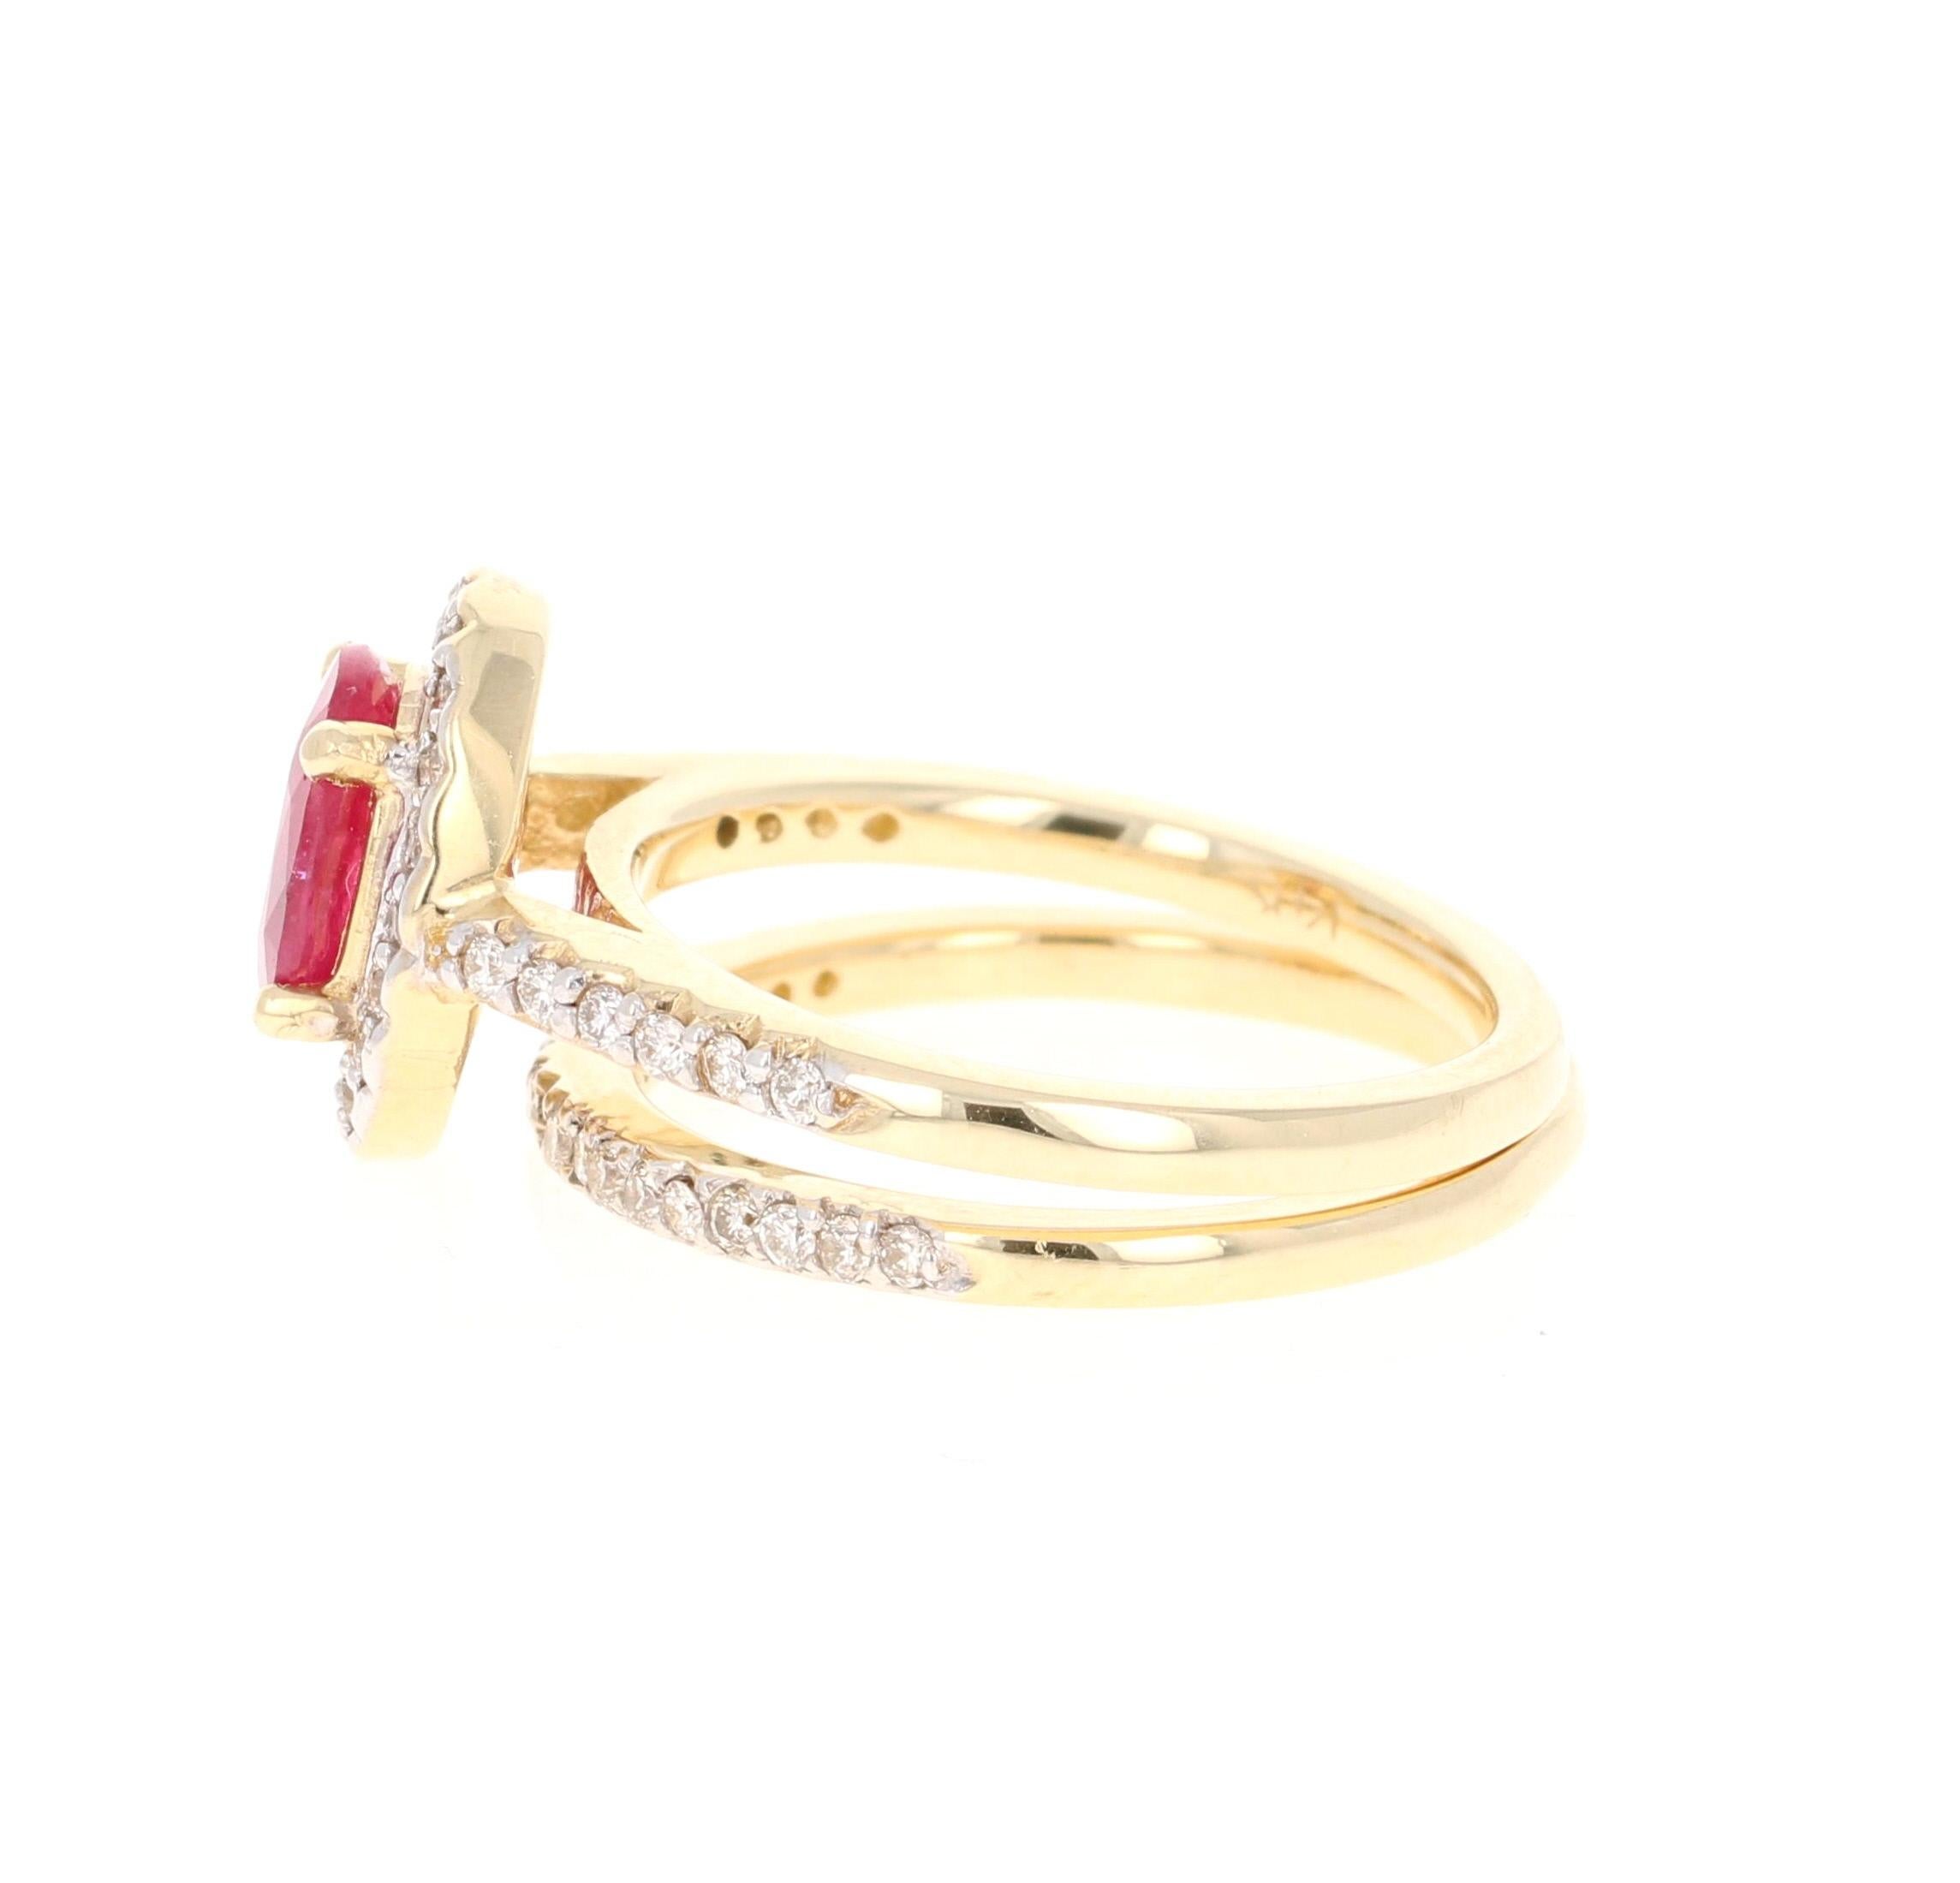 Modern 1.83 Carat Oval Cut Ruby Diamond 14 Karat Yellow Gold Engagement Ring and Band